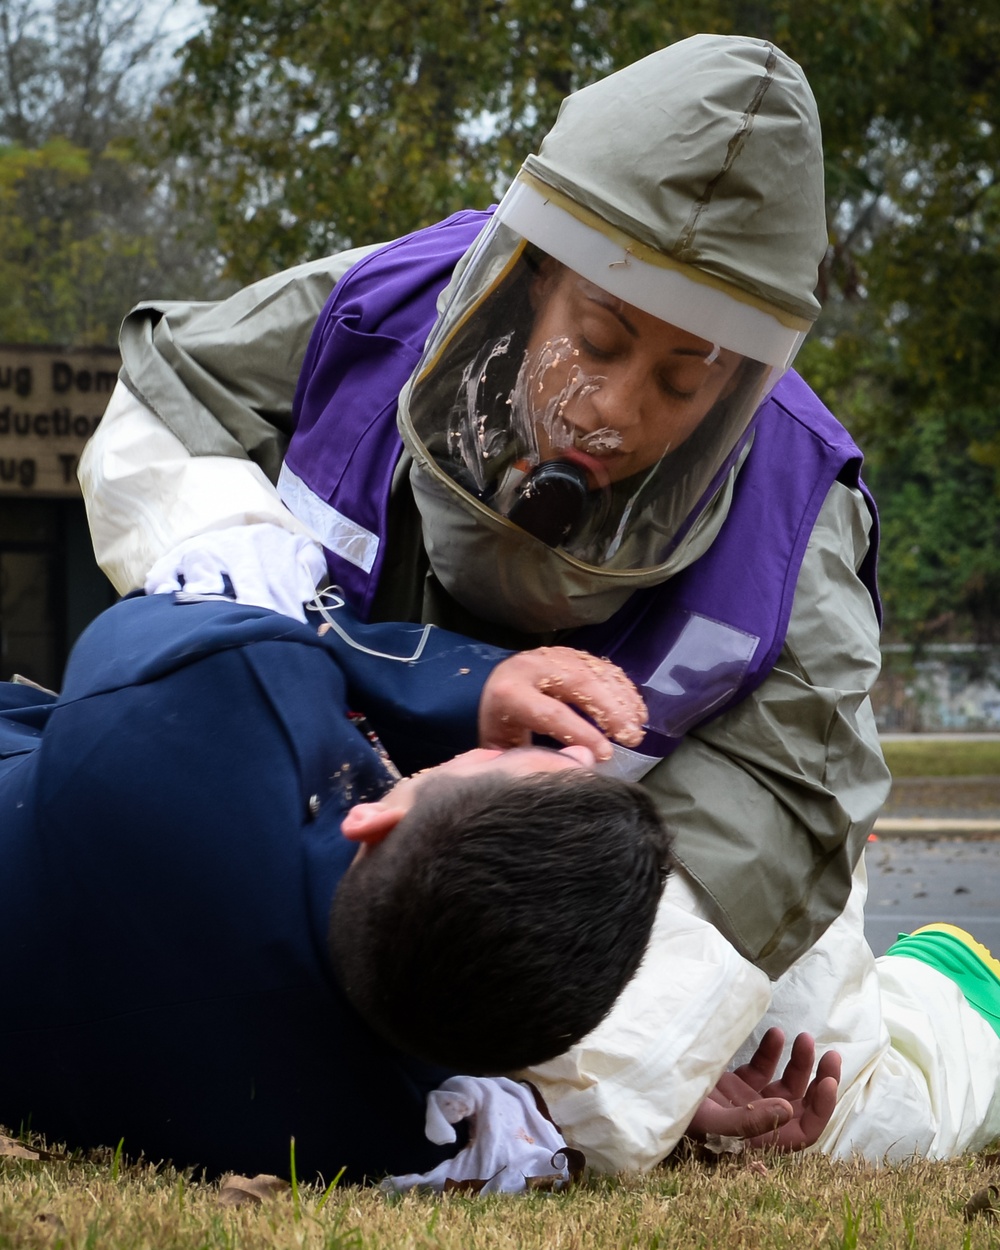 CBRN sim tests medics’ crisis response skills